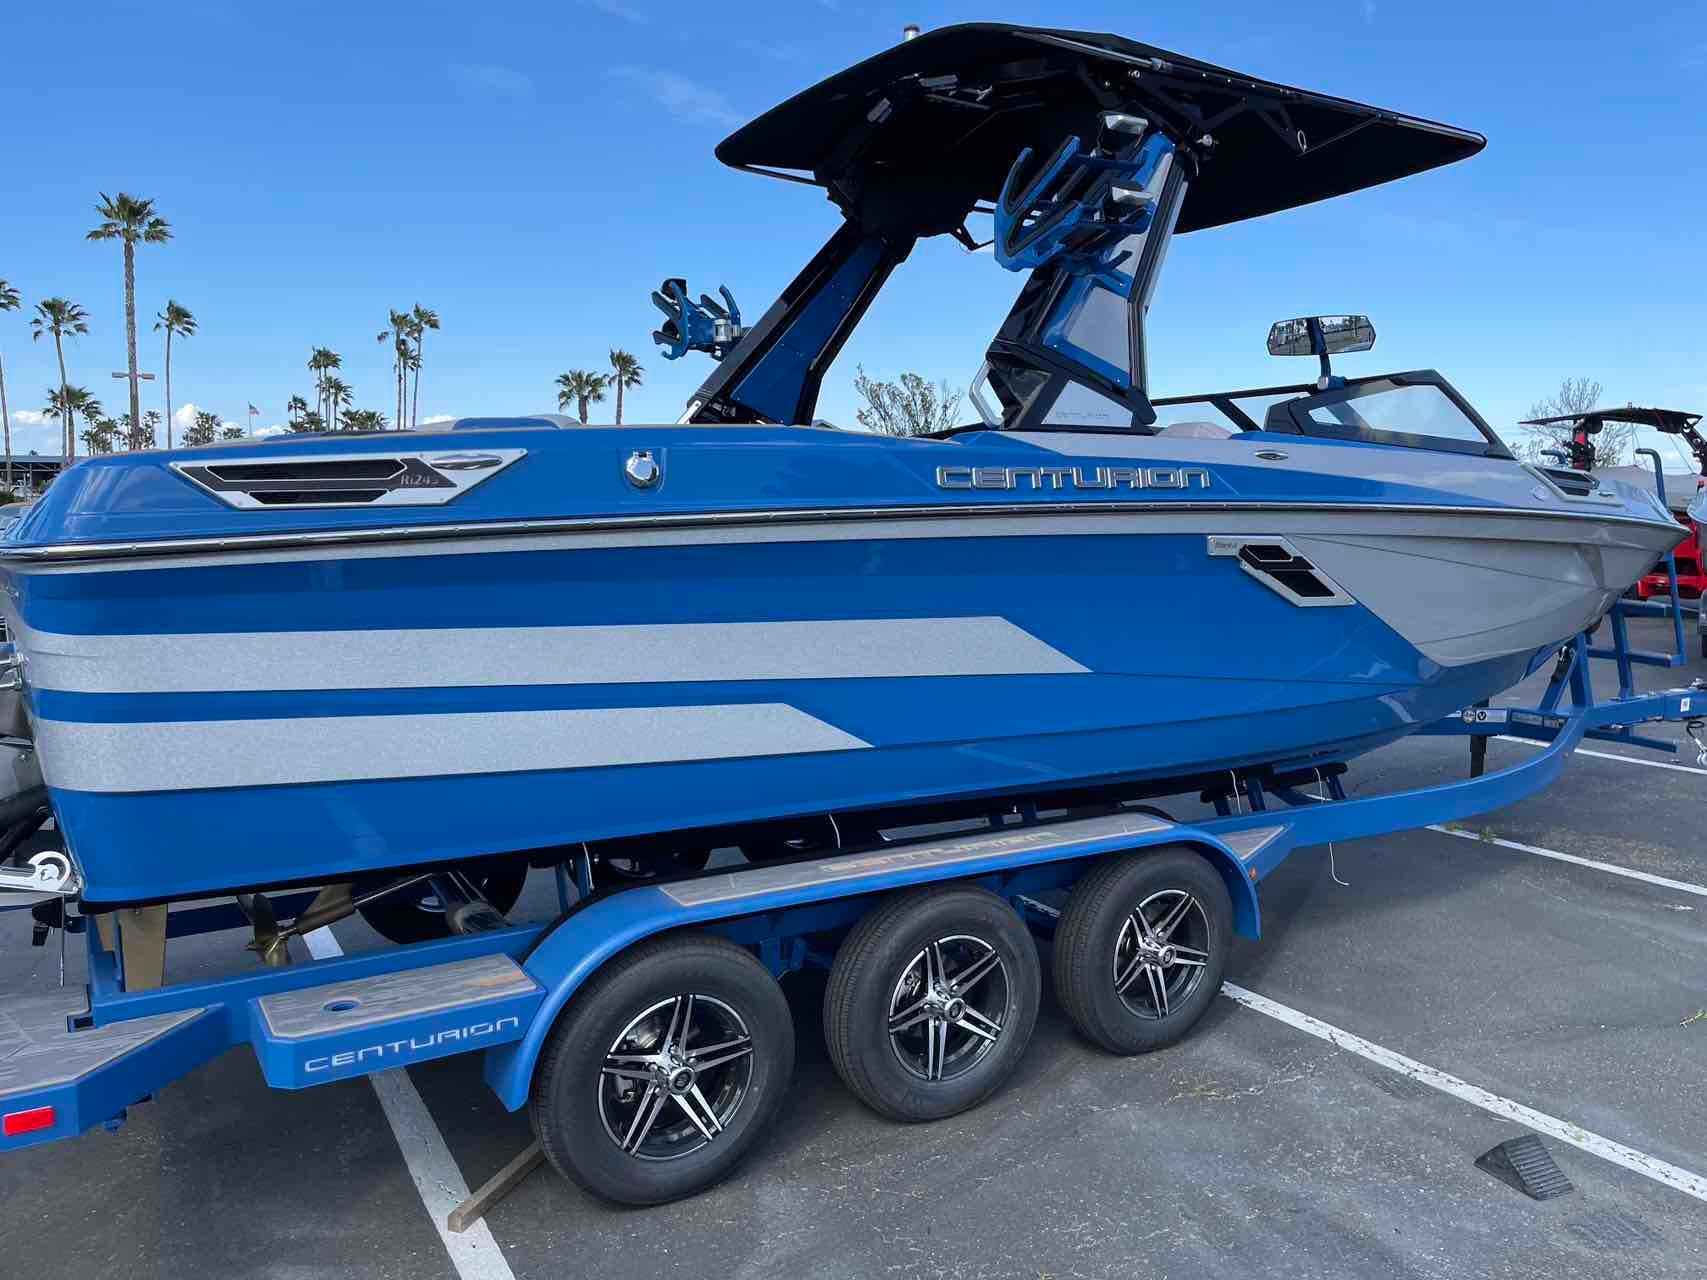 New 2023 Centurion Ri245, 94503 Discovery Bay - Boat Trader